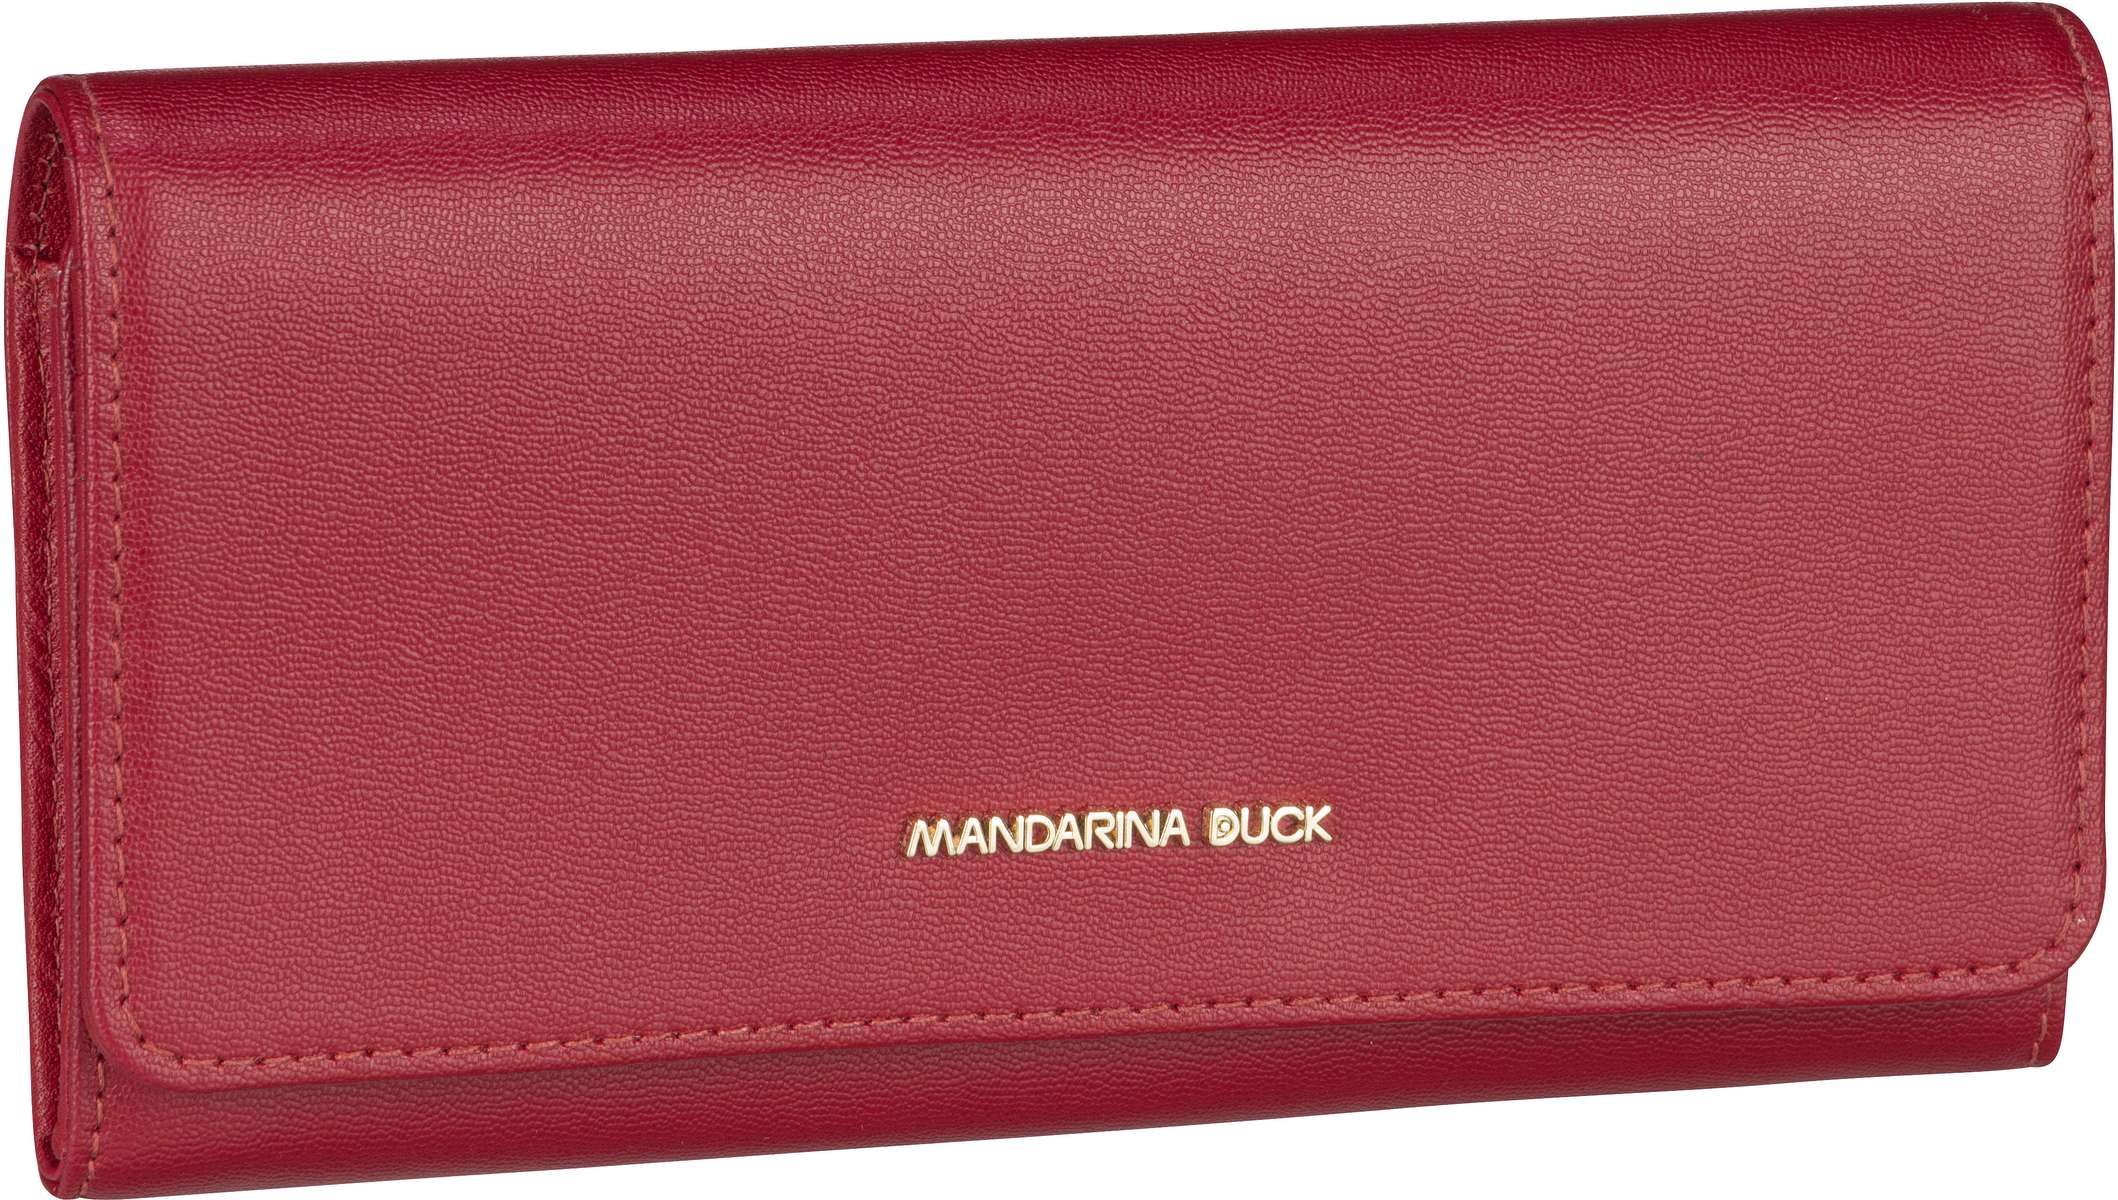 Mandarina Duck Luna Continental Wallet KBP52 - Rhubarb